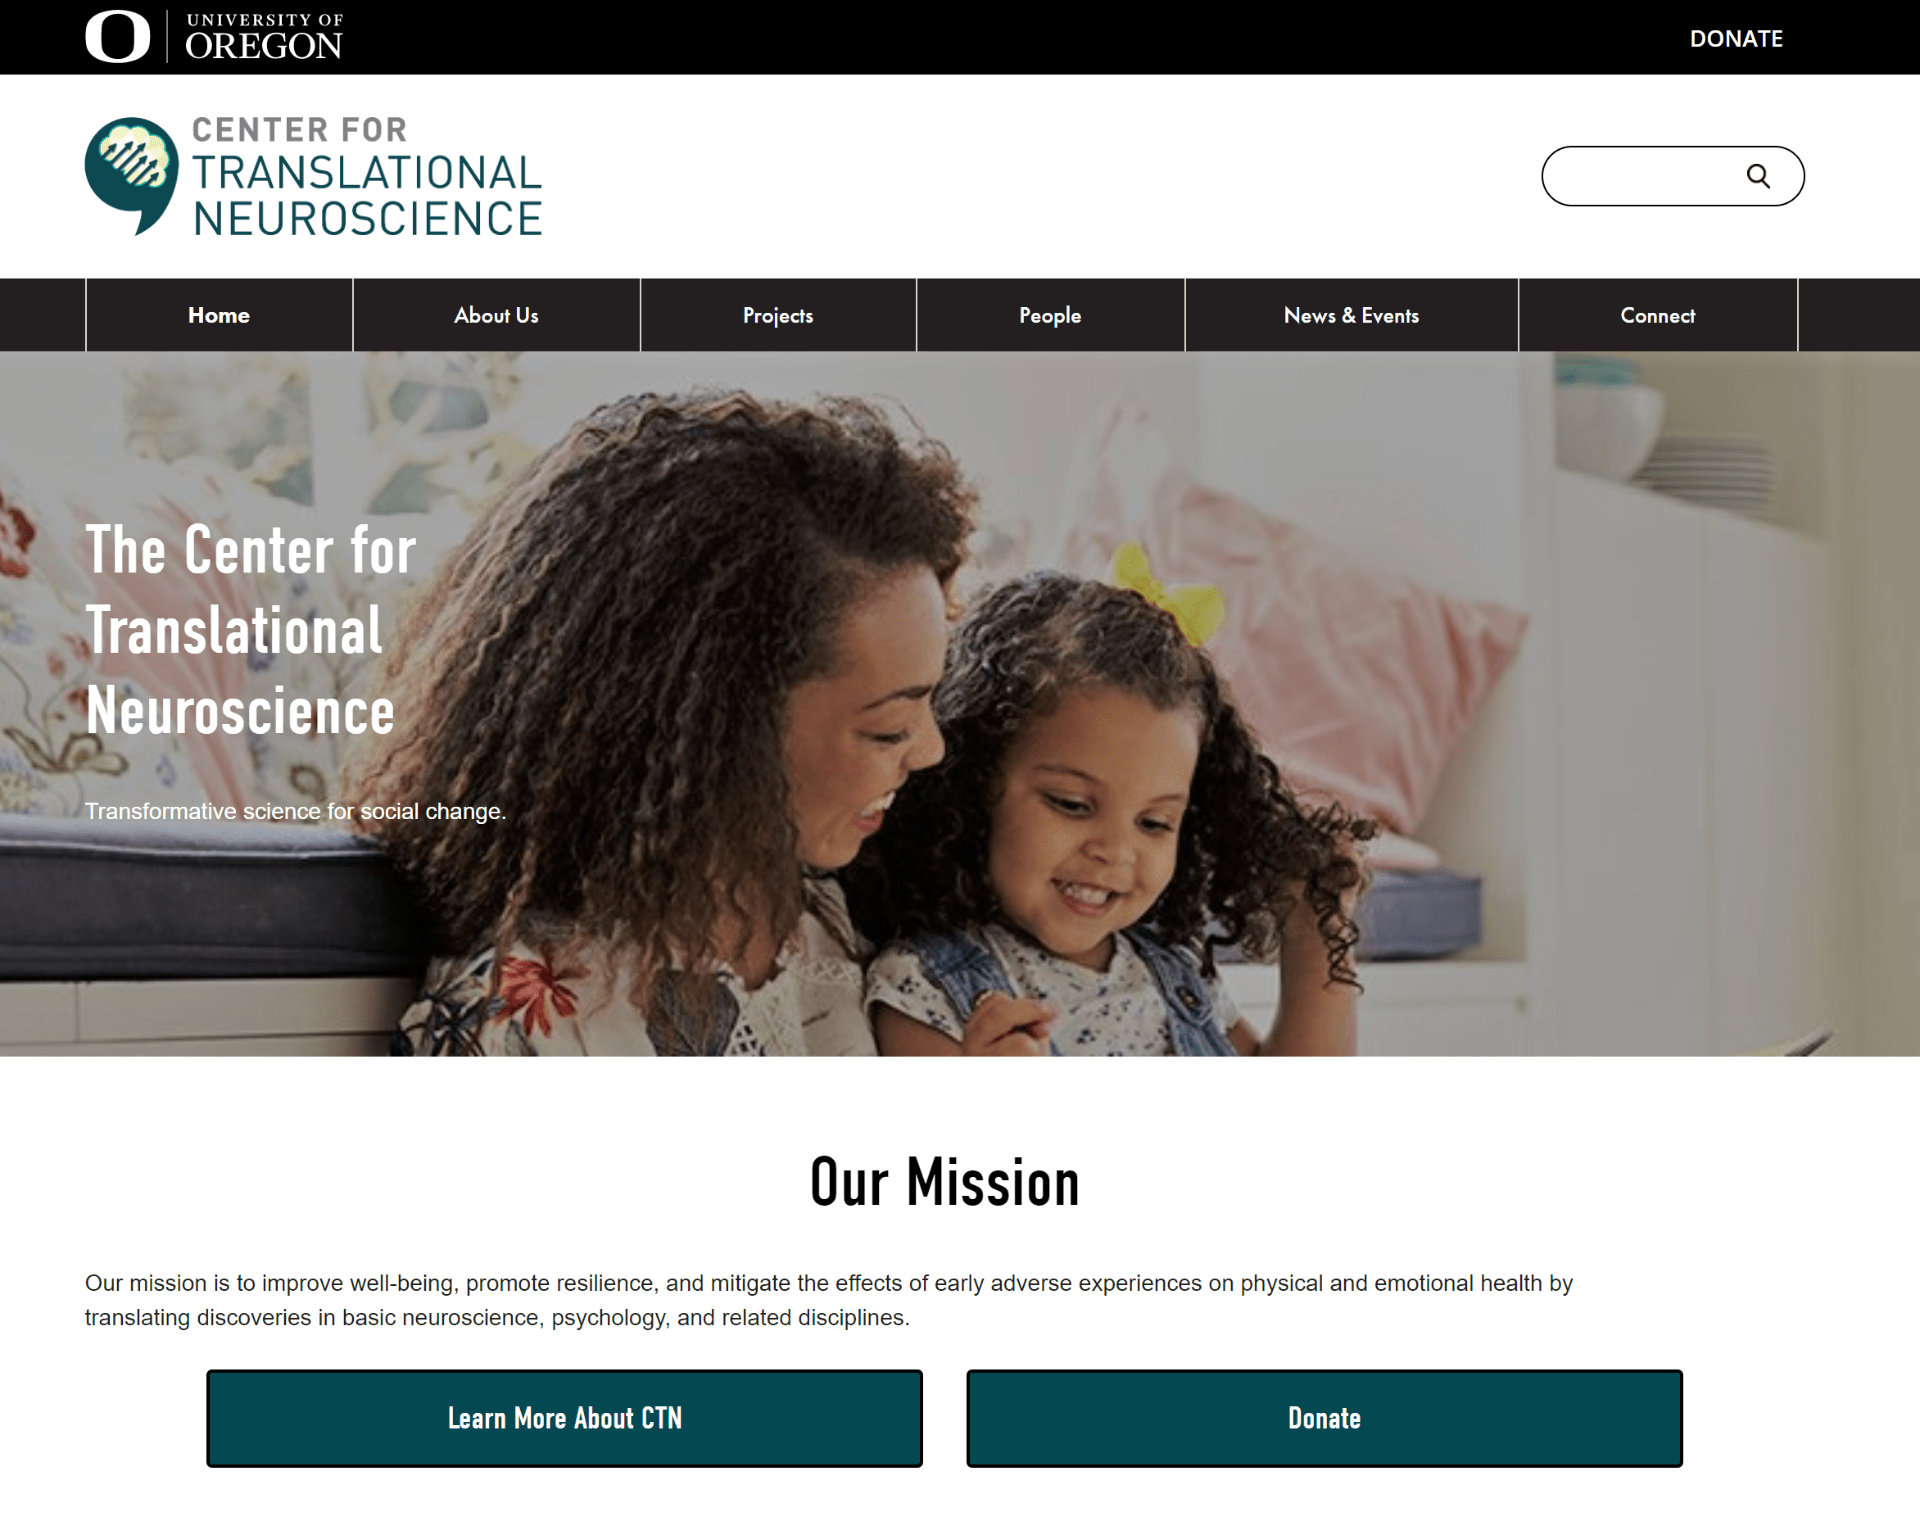 Center for Translational Neuroscience website screenshot